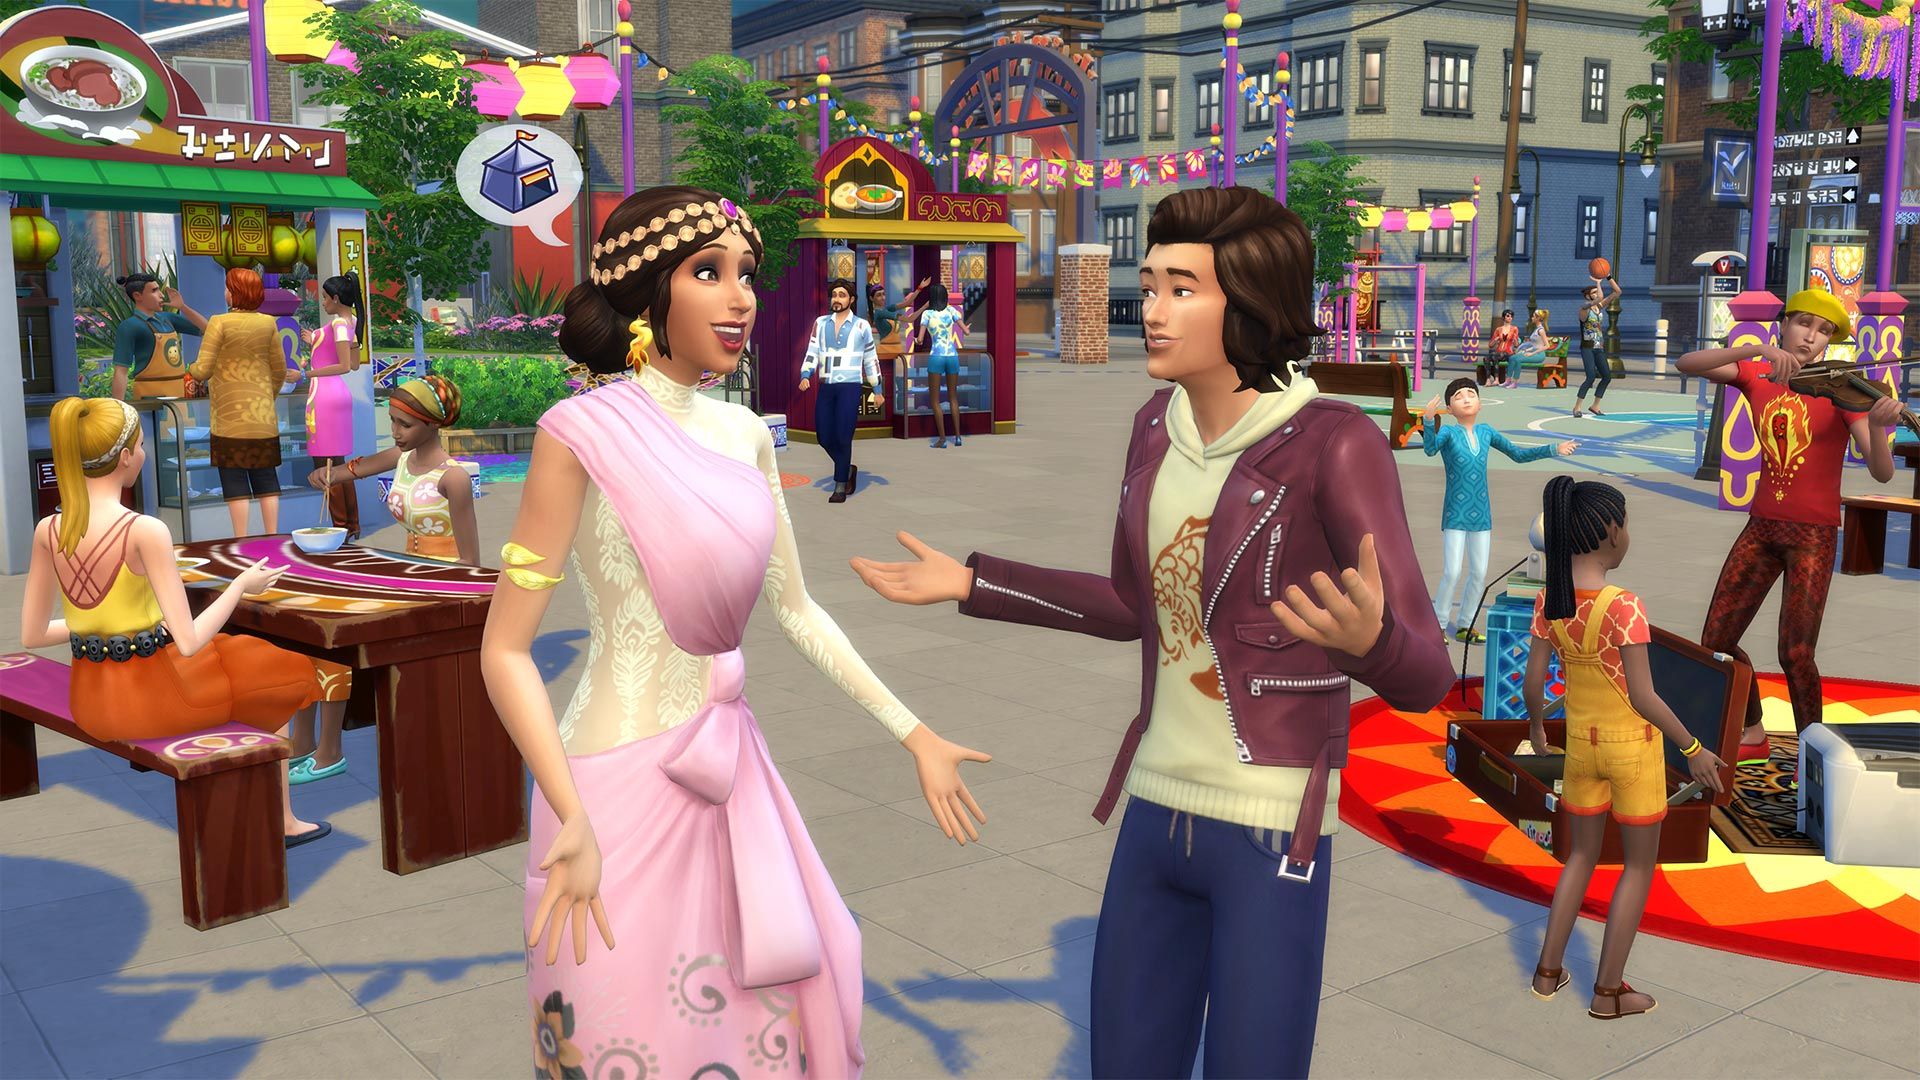 The Sims 4 Bundle - City Living, Dine Out, Bowling Night Stuff DLCs Origin CD Key